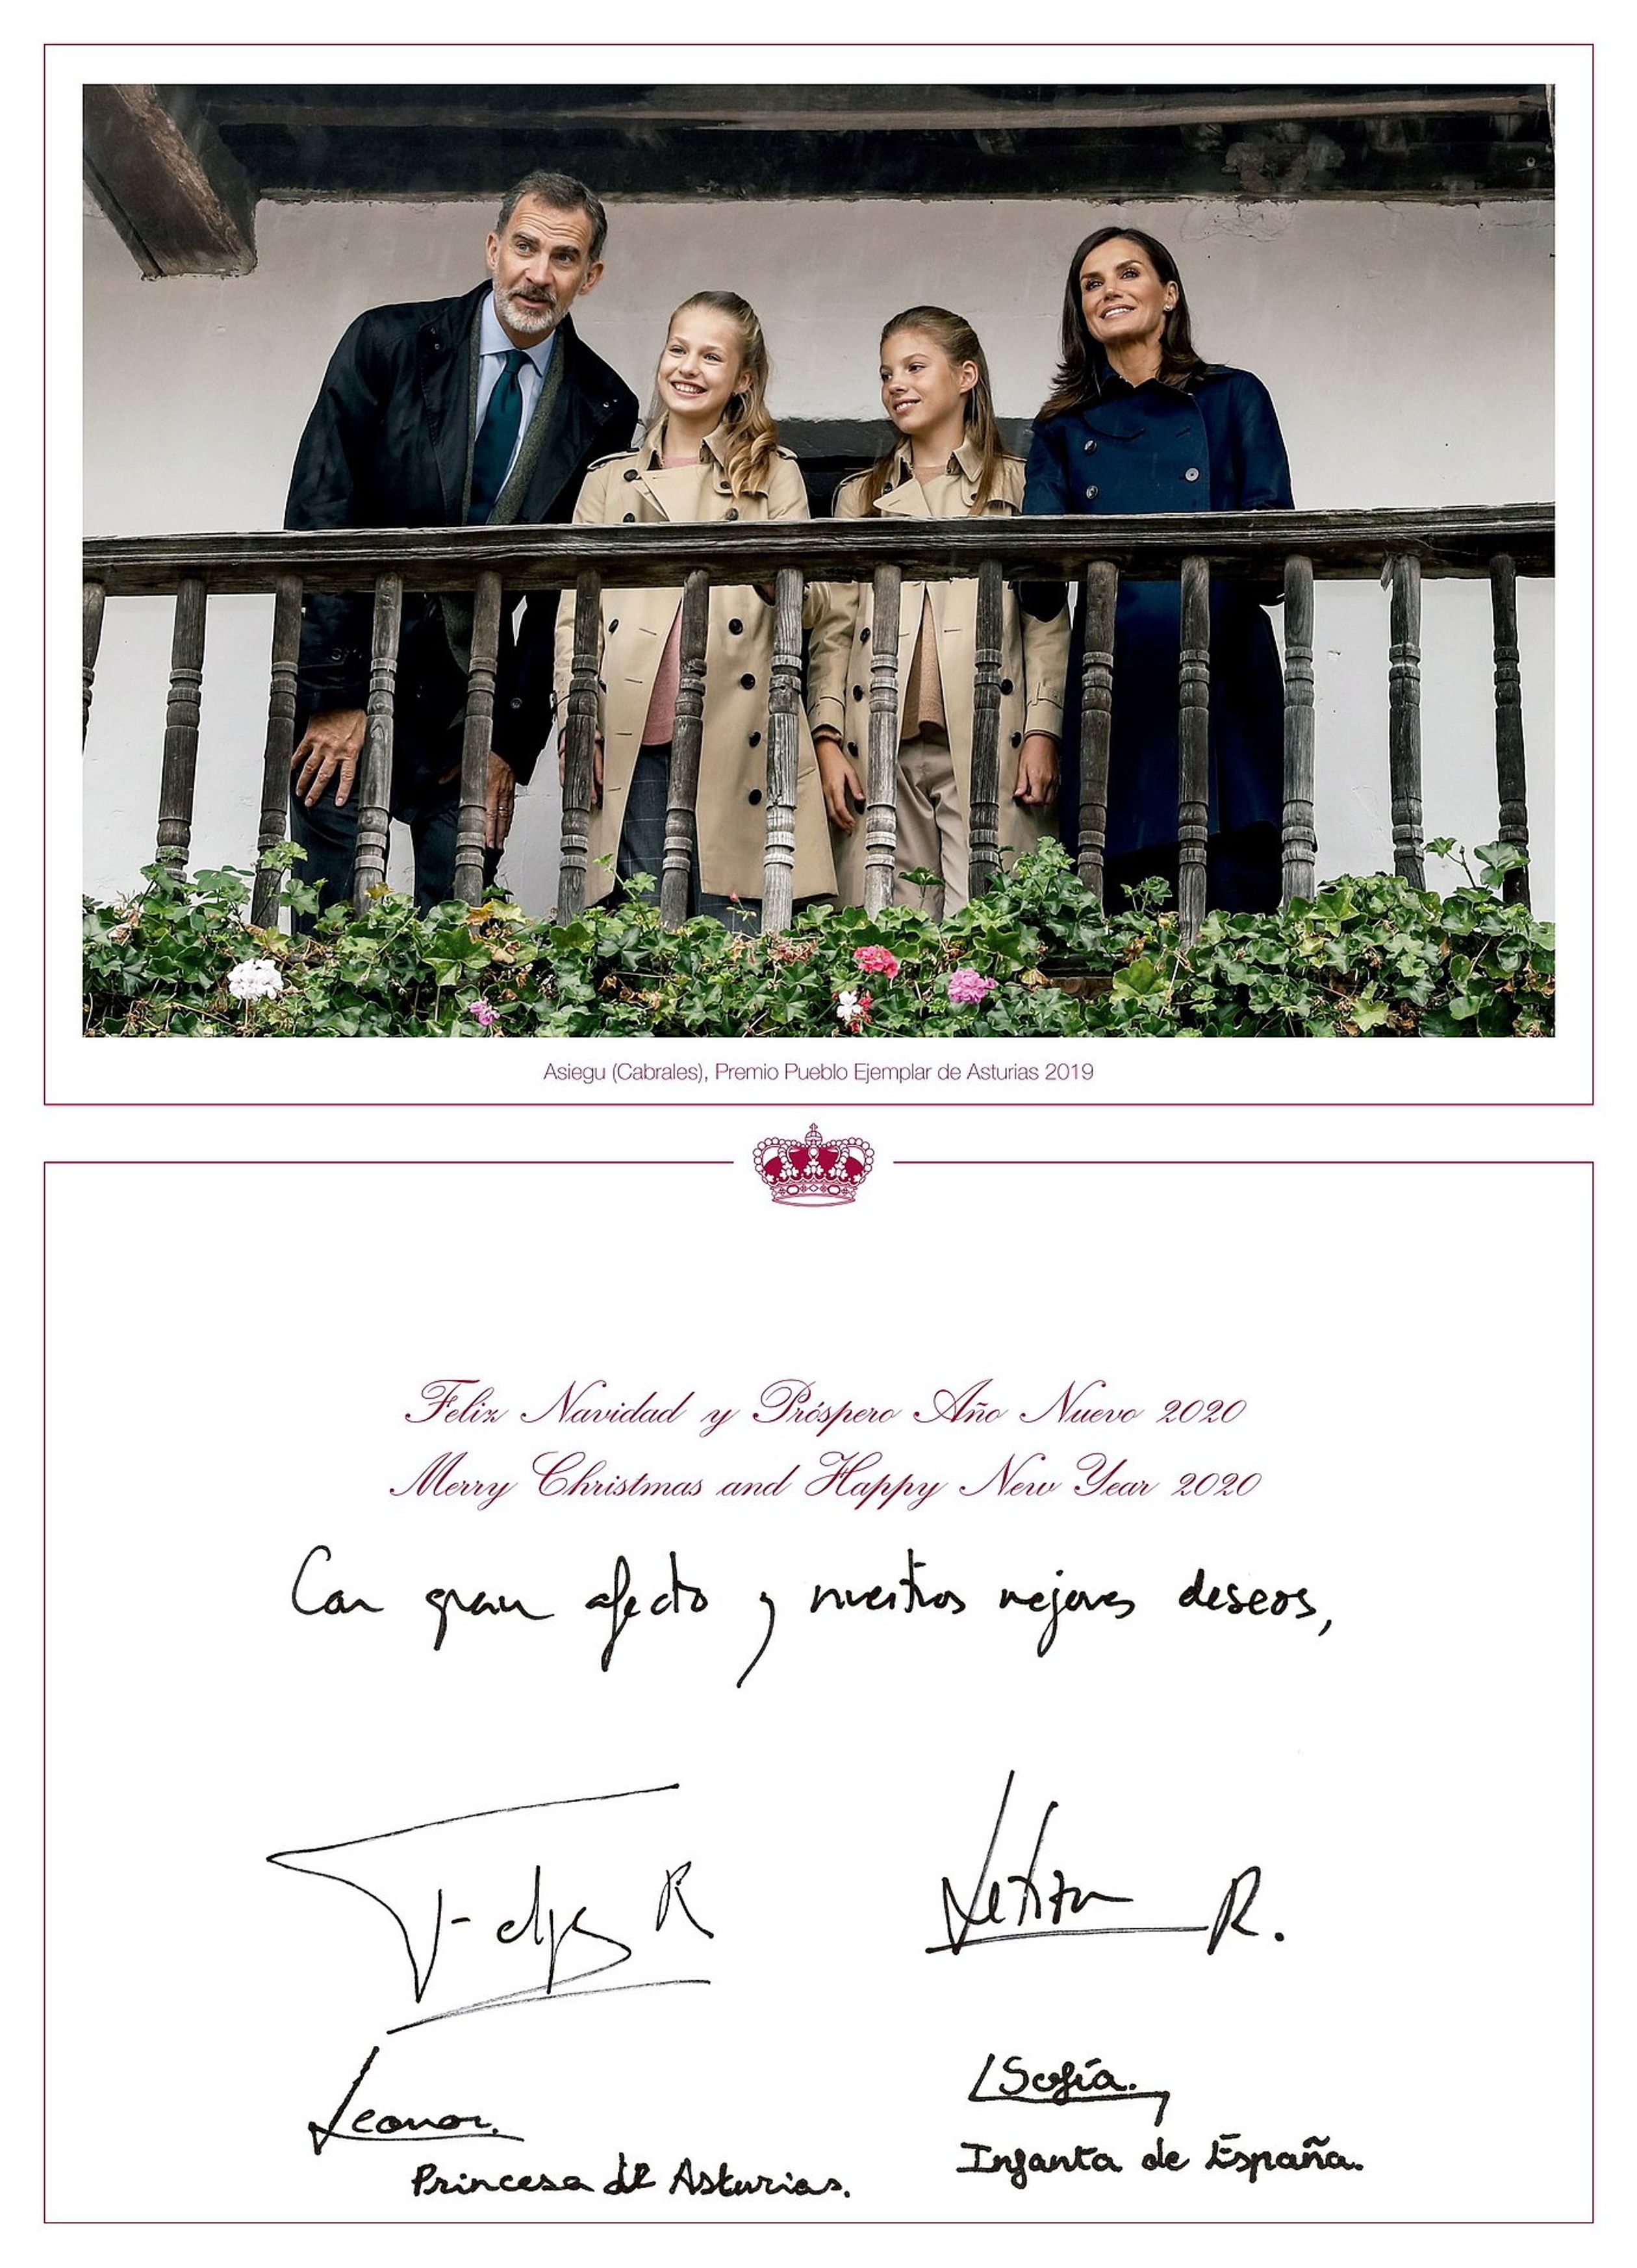 En ook de Spaanse koning Felipe, koningin Letizia en hun dochters Leonor en Sofia verstuurden